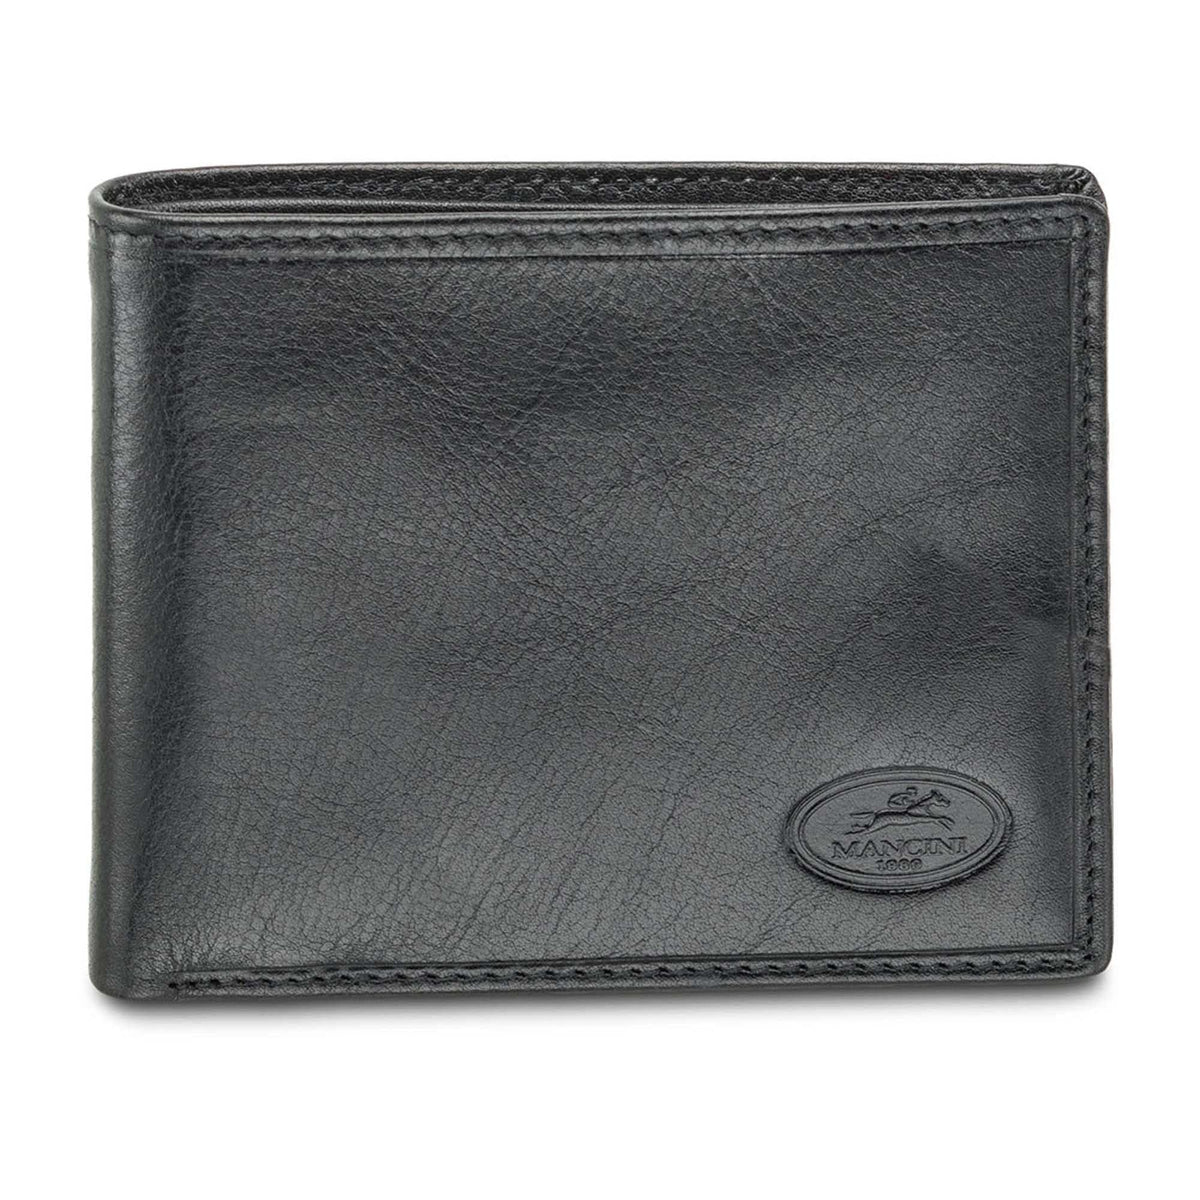 Mancini Men's Classic Billfold Wallet